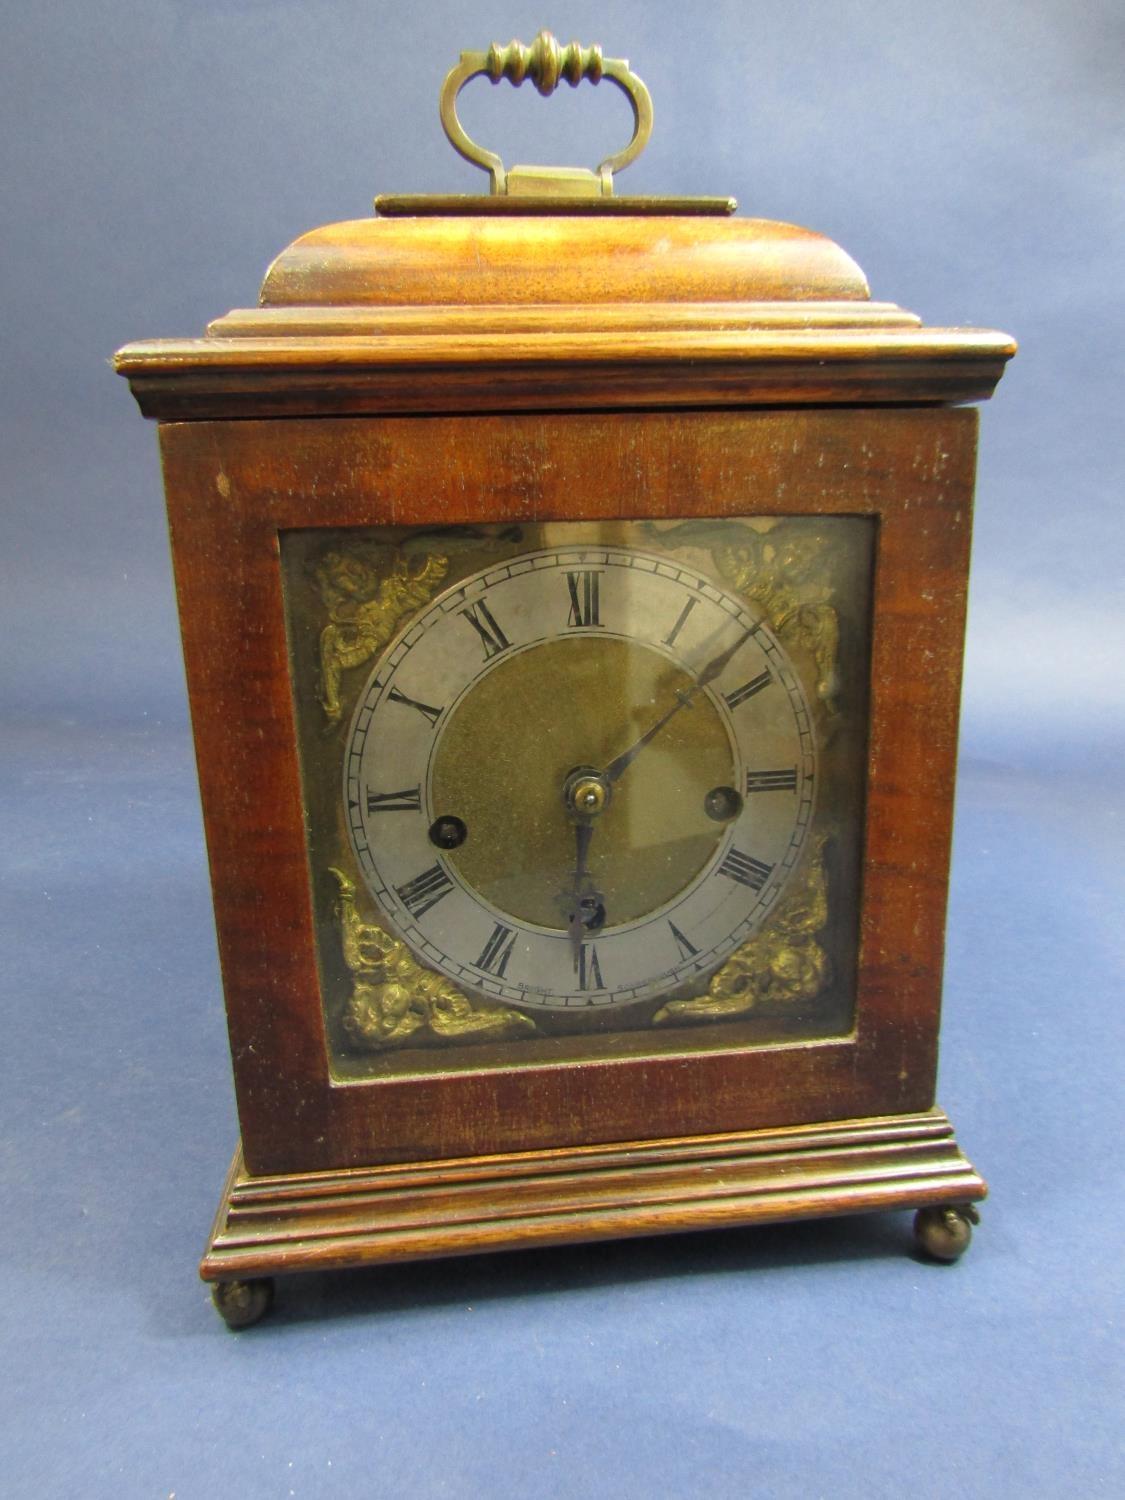 Mid-20th century walnut cased three train bracket type clock by Bright of Scarborough, gilt dial